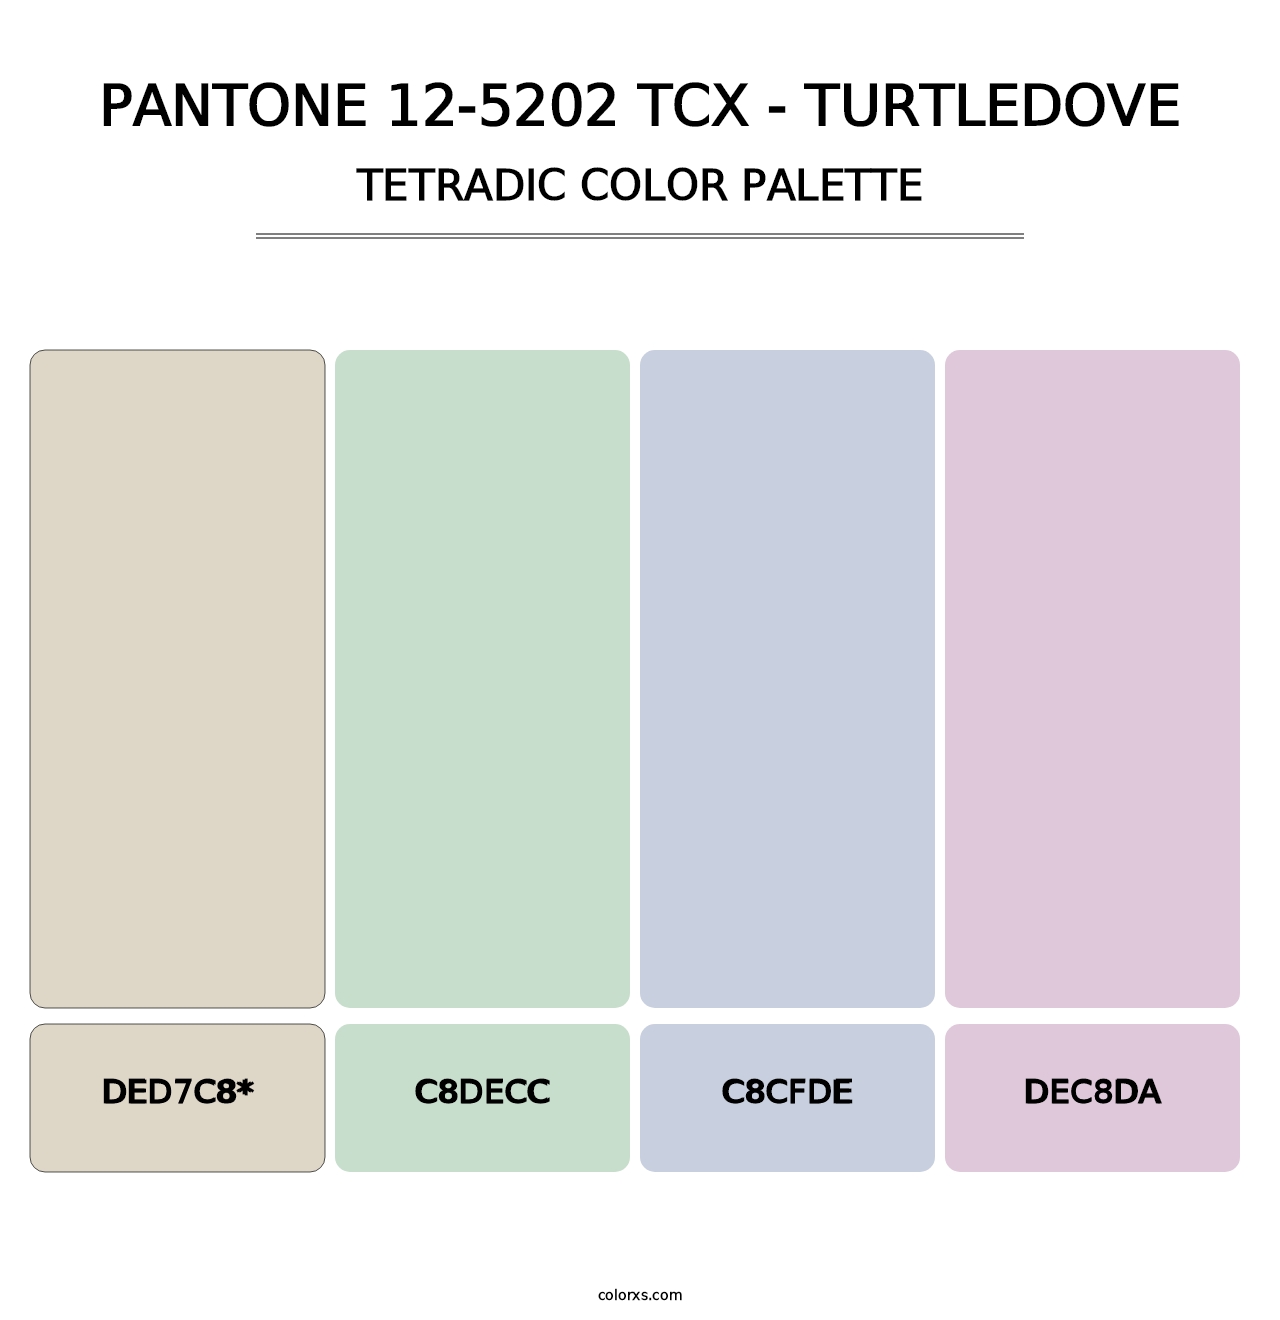 PANTONE 12-5202 TCX - Turtledove - Tetradic Color Palette